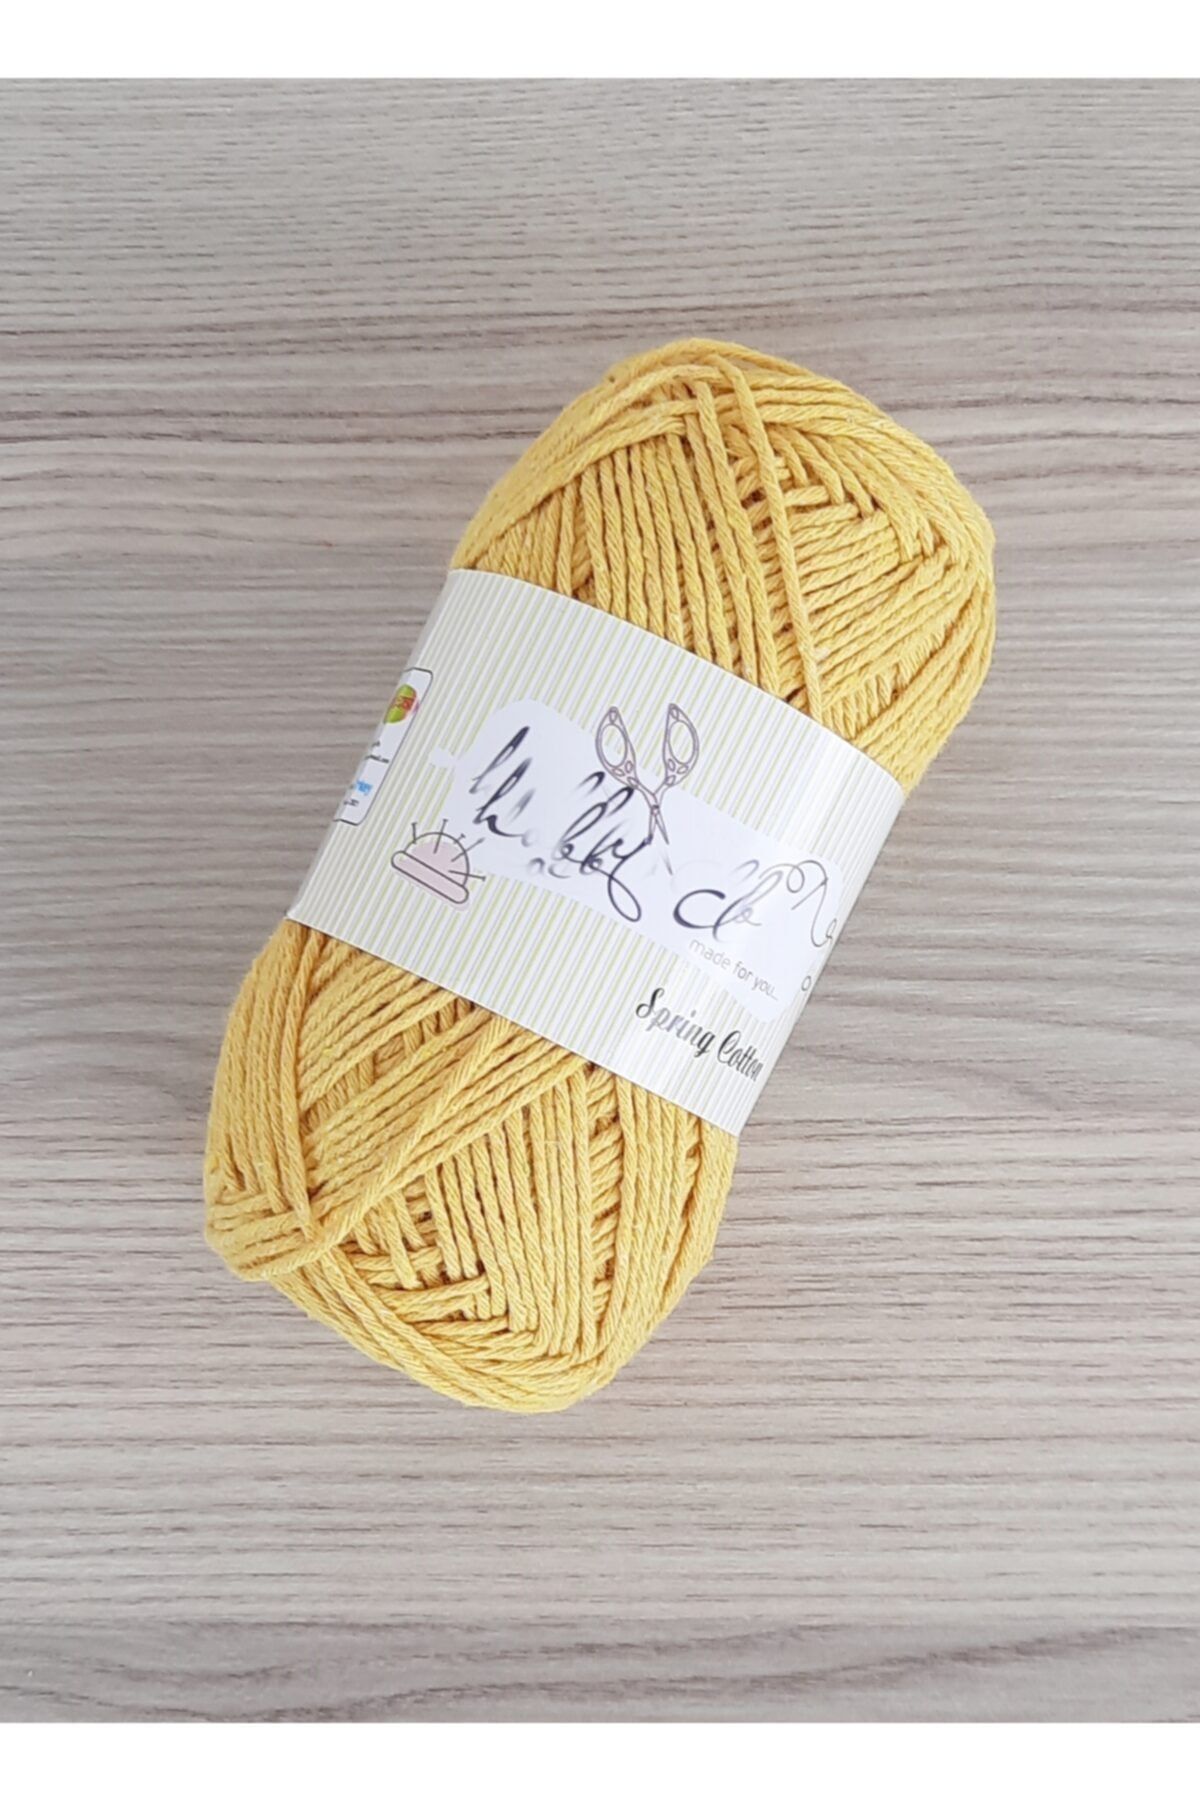 Kezban Tekstil Sarı Amigurumi Ve Punch (panç) Ipi %100 Pamuk Natürel Koton